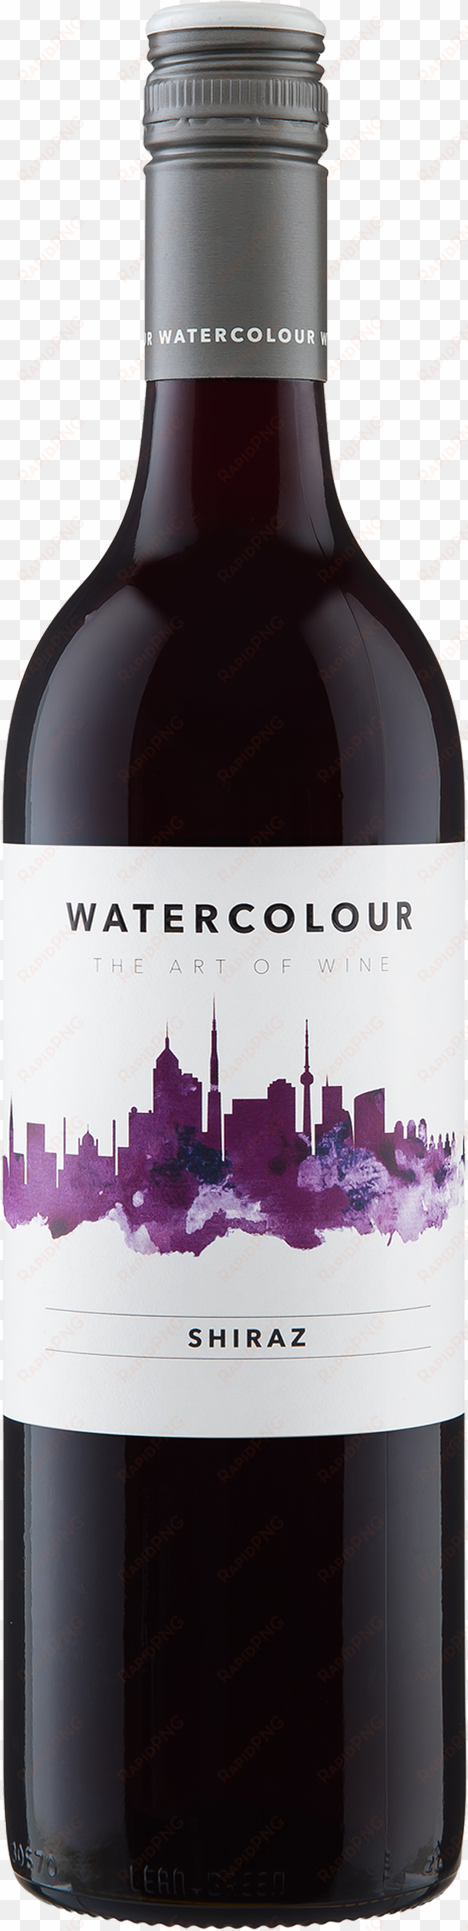 watercolour shiraz - watercolour wine bottle png